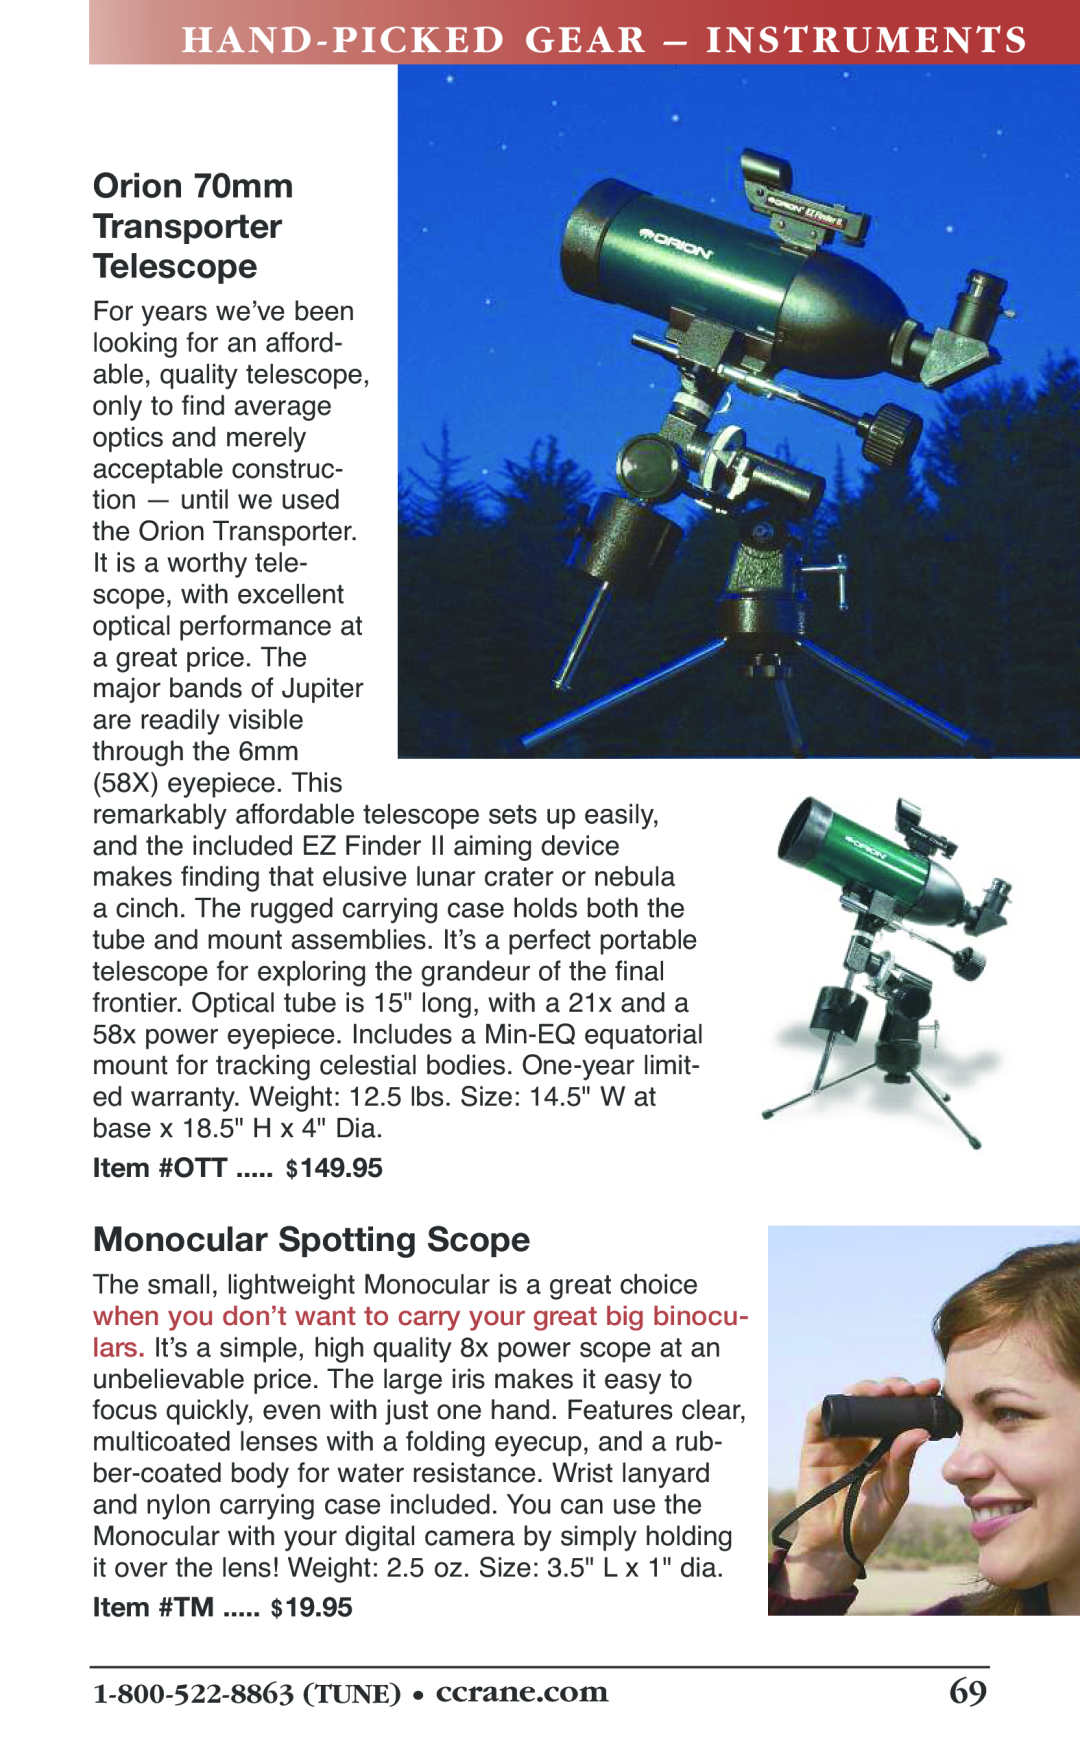 C. Crane 19f Han D- Pi Cked Gear – Inst Ru Ment S, Orion 70mm Transporter Telescope, Monocular Spotting Scope, $149.95 